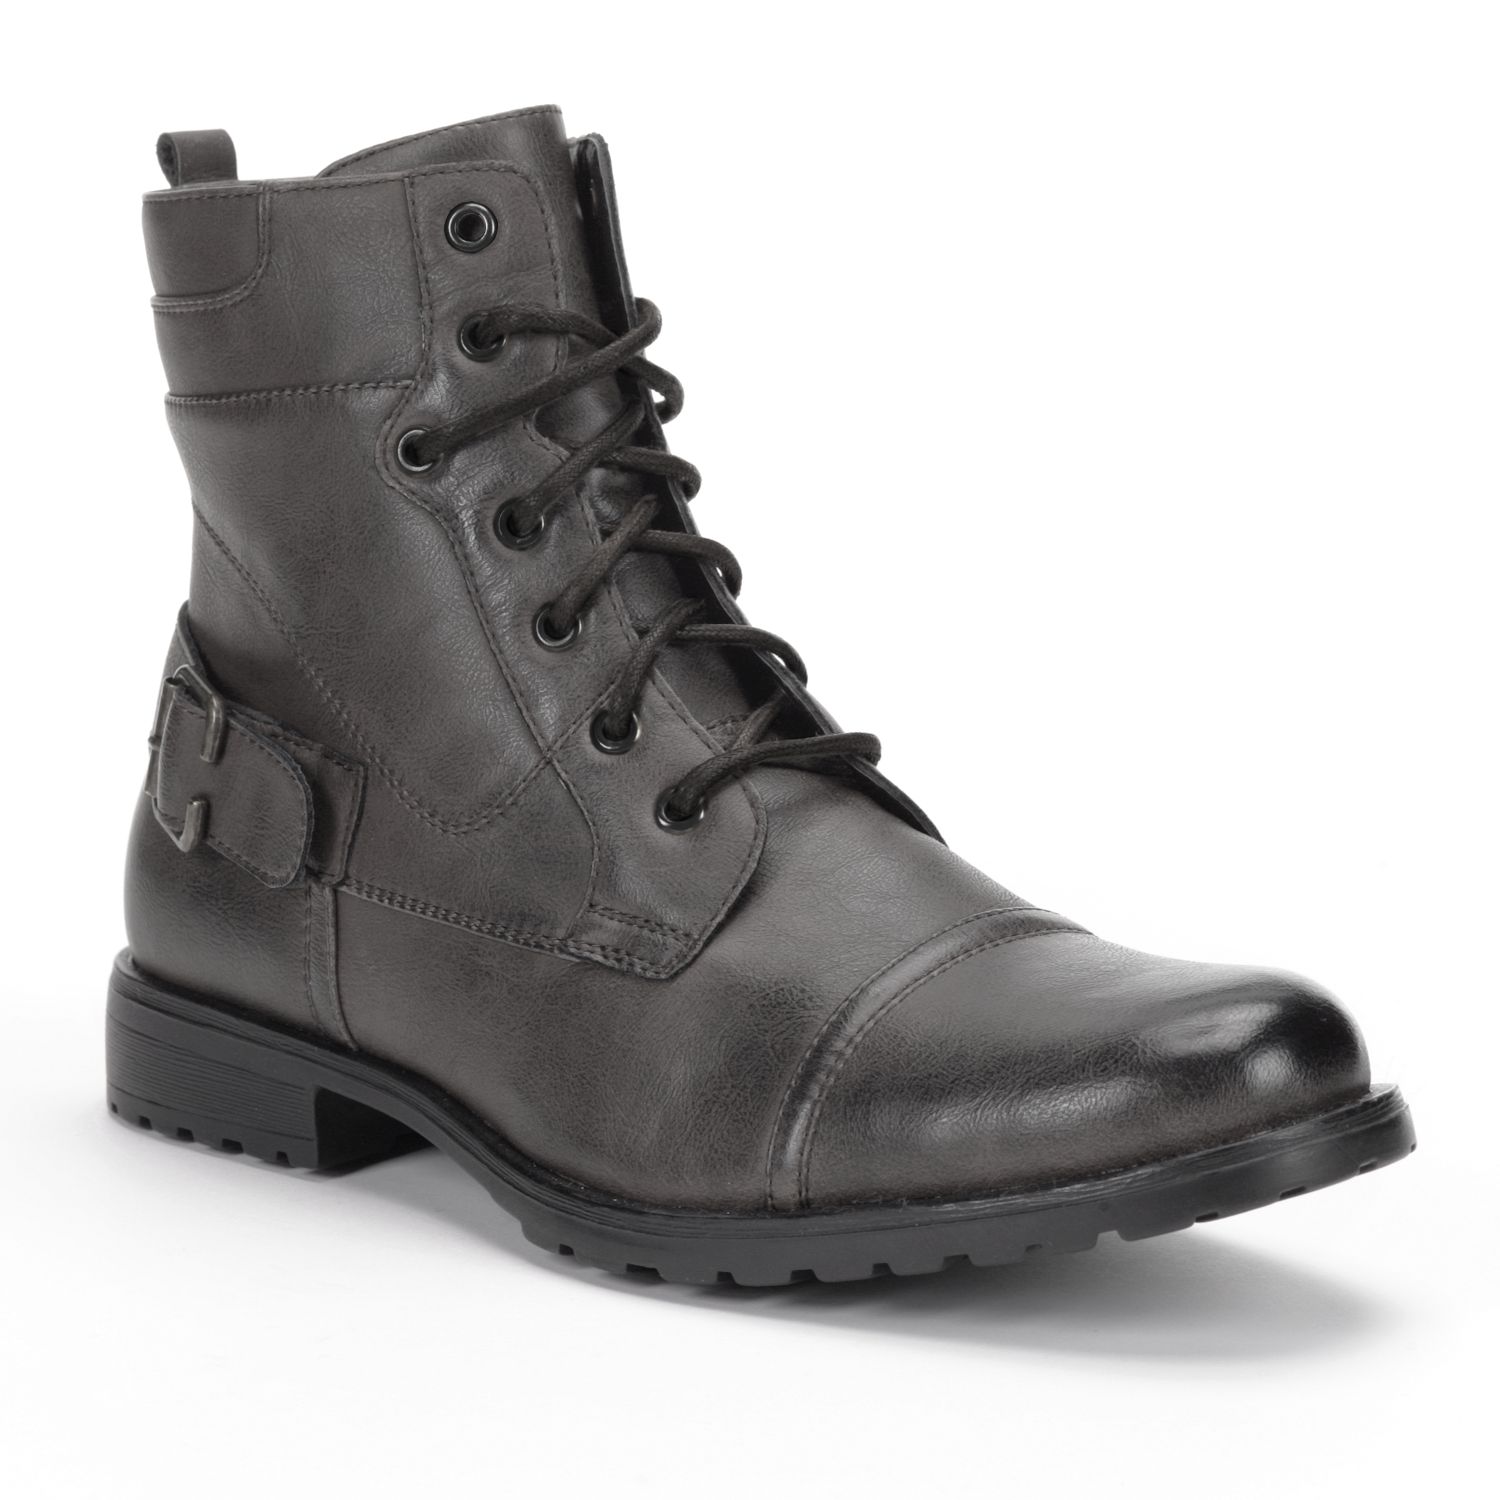 Apt. 9® Boots - Men